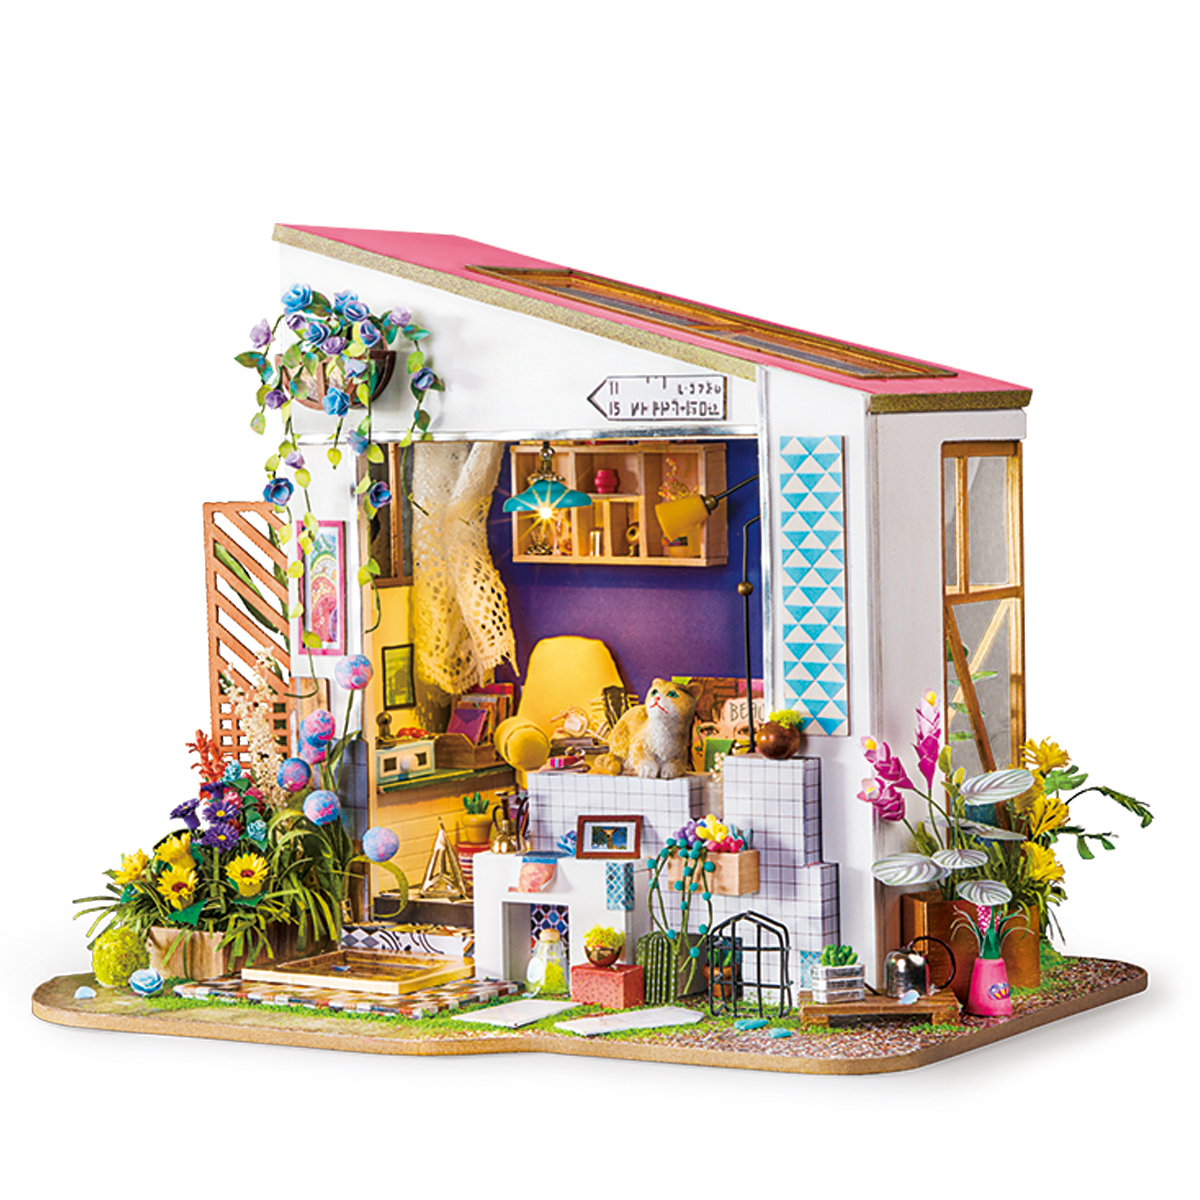 the miniature house